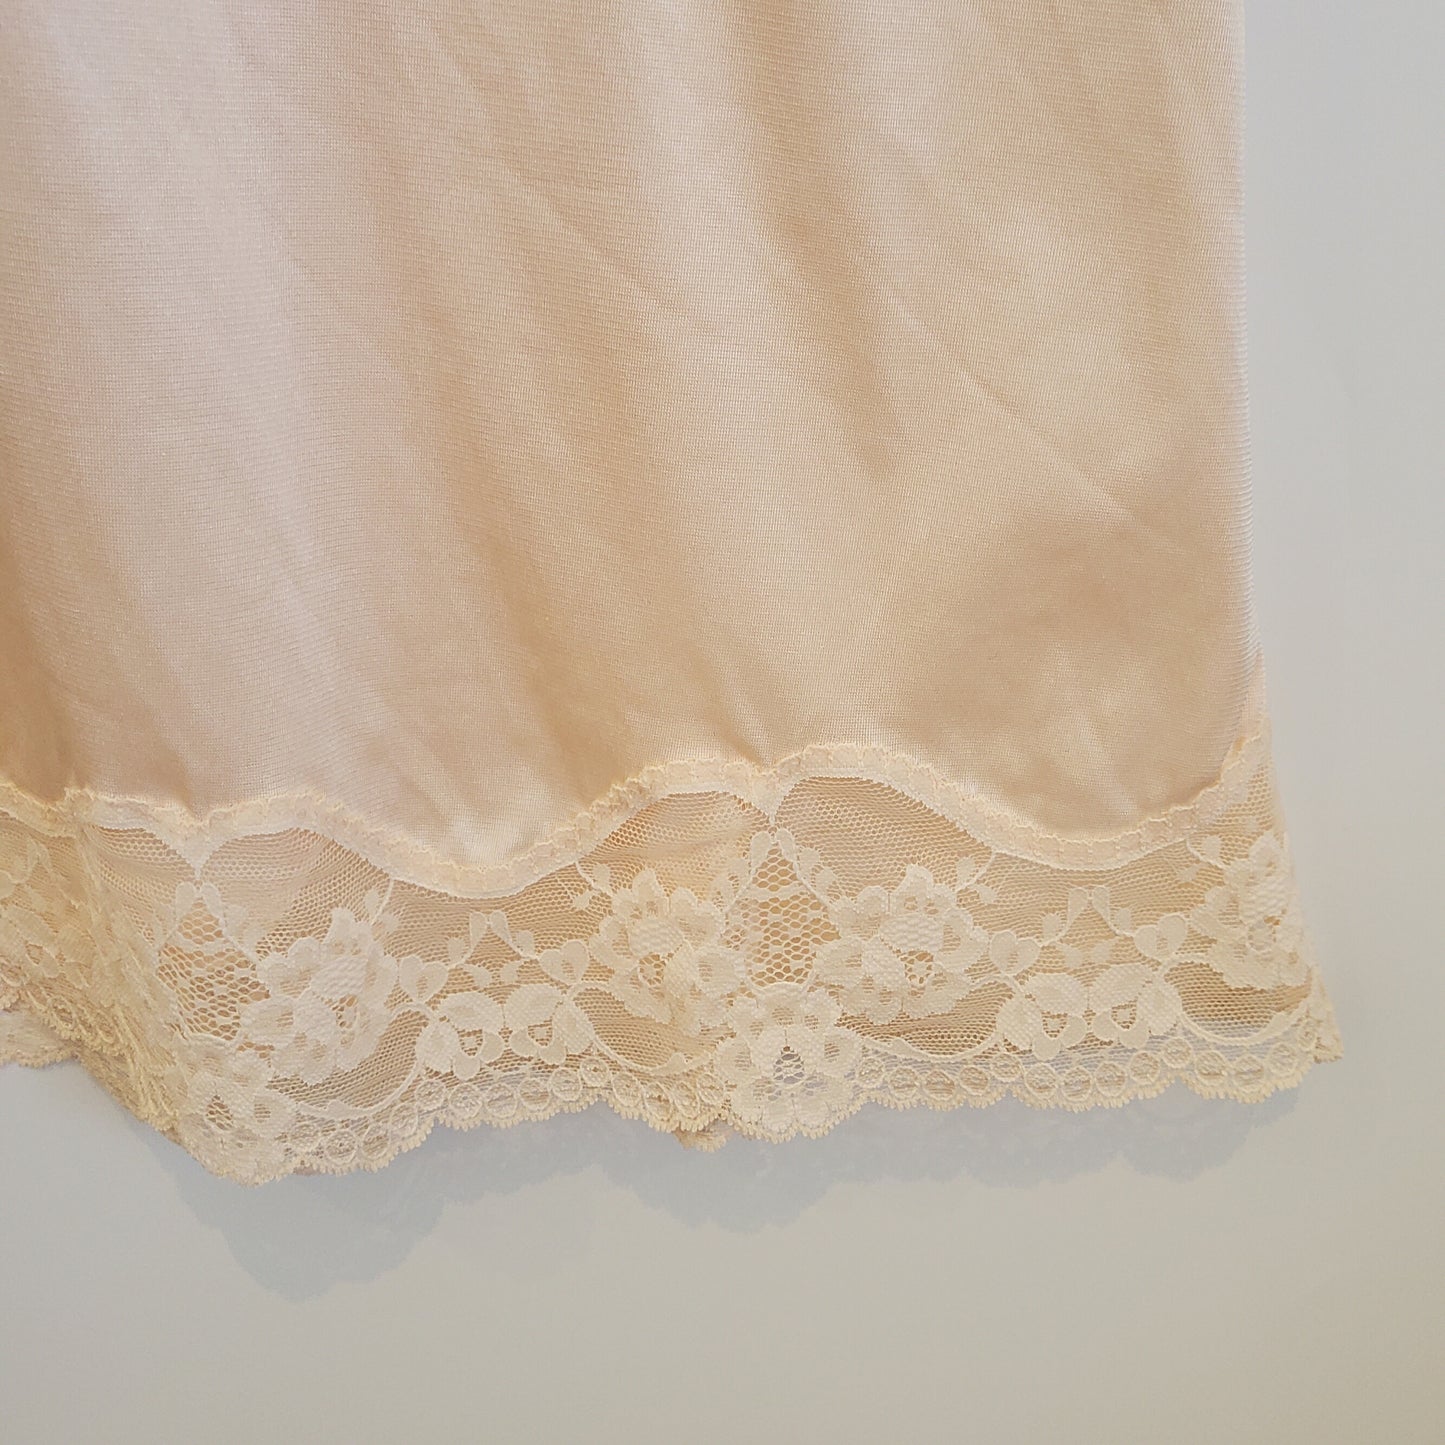 Vintage Lace Trim Slip Skirt | Size 10-12